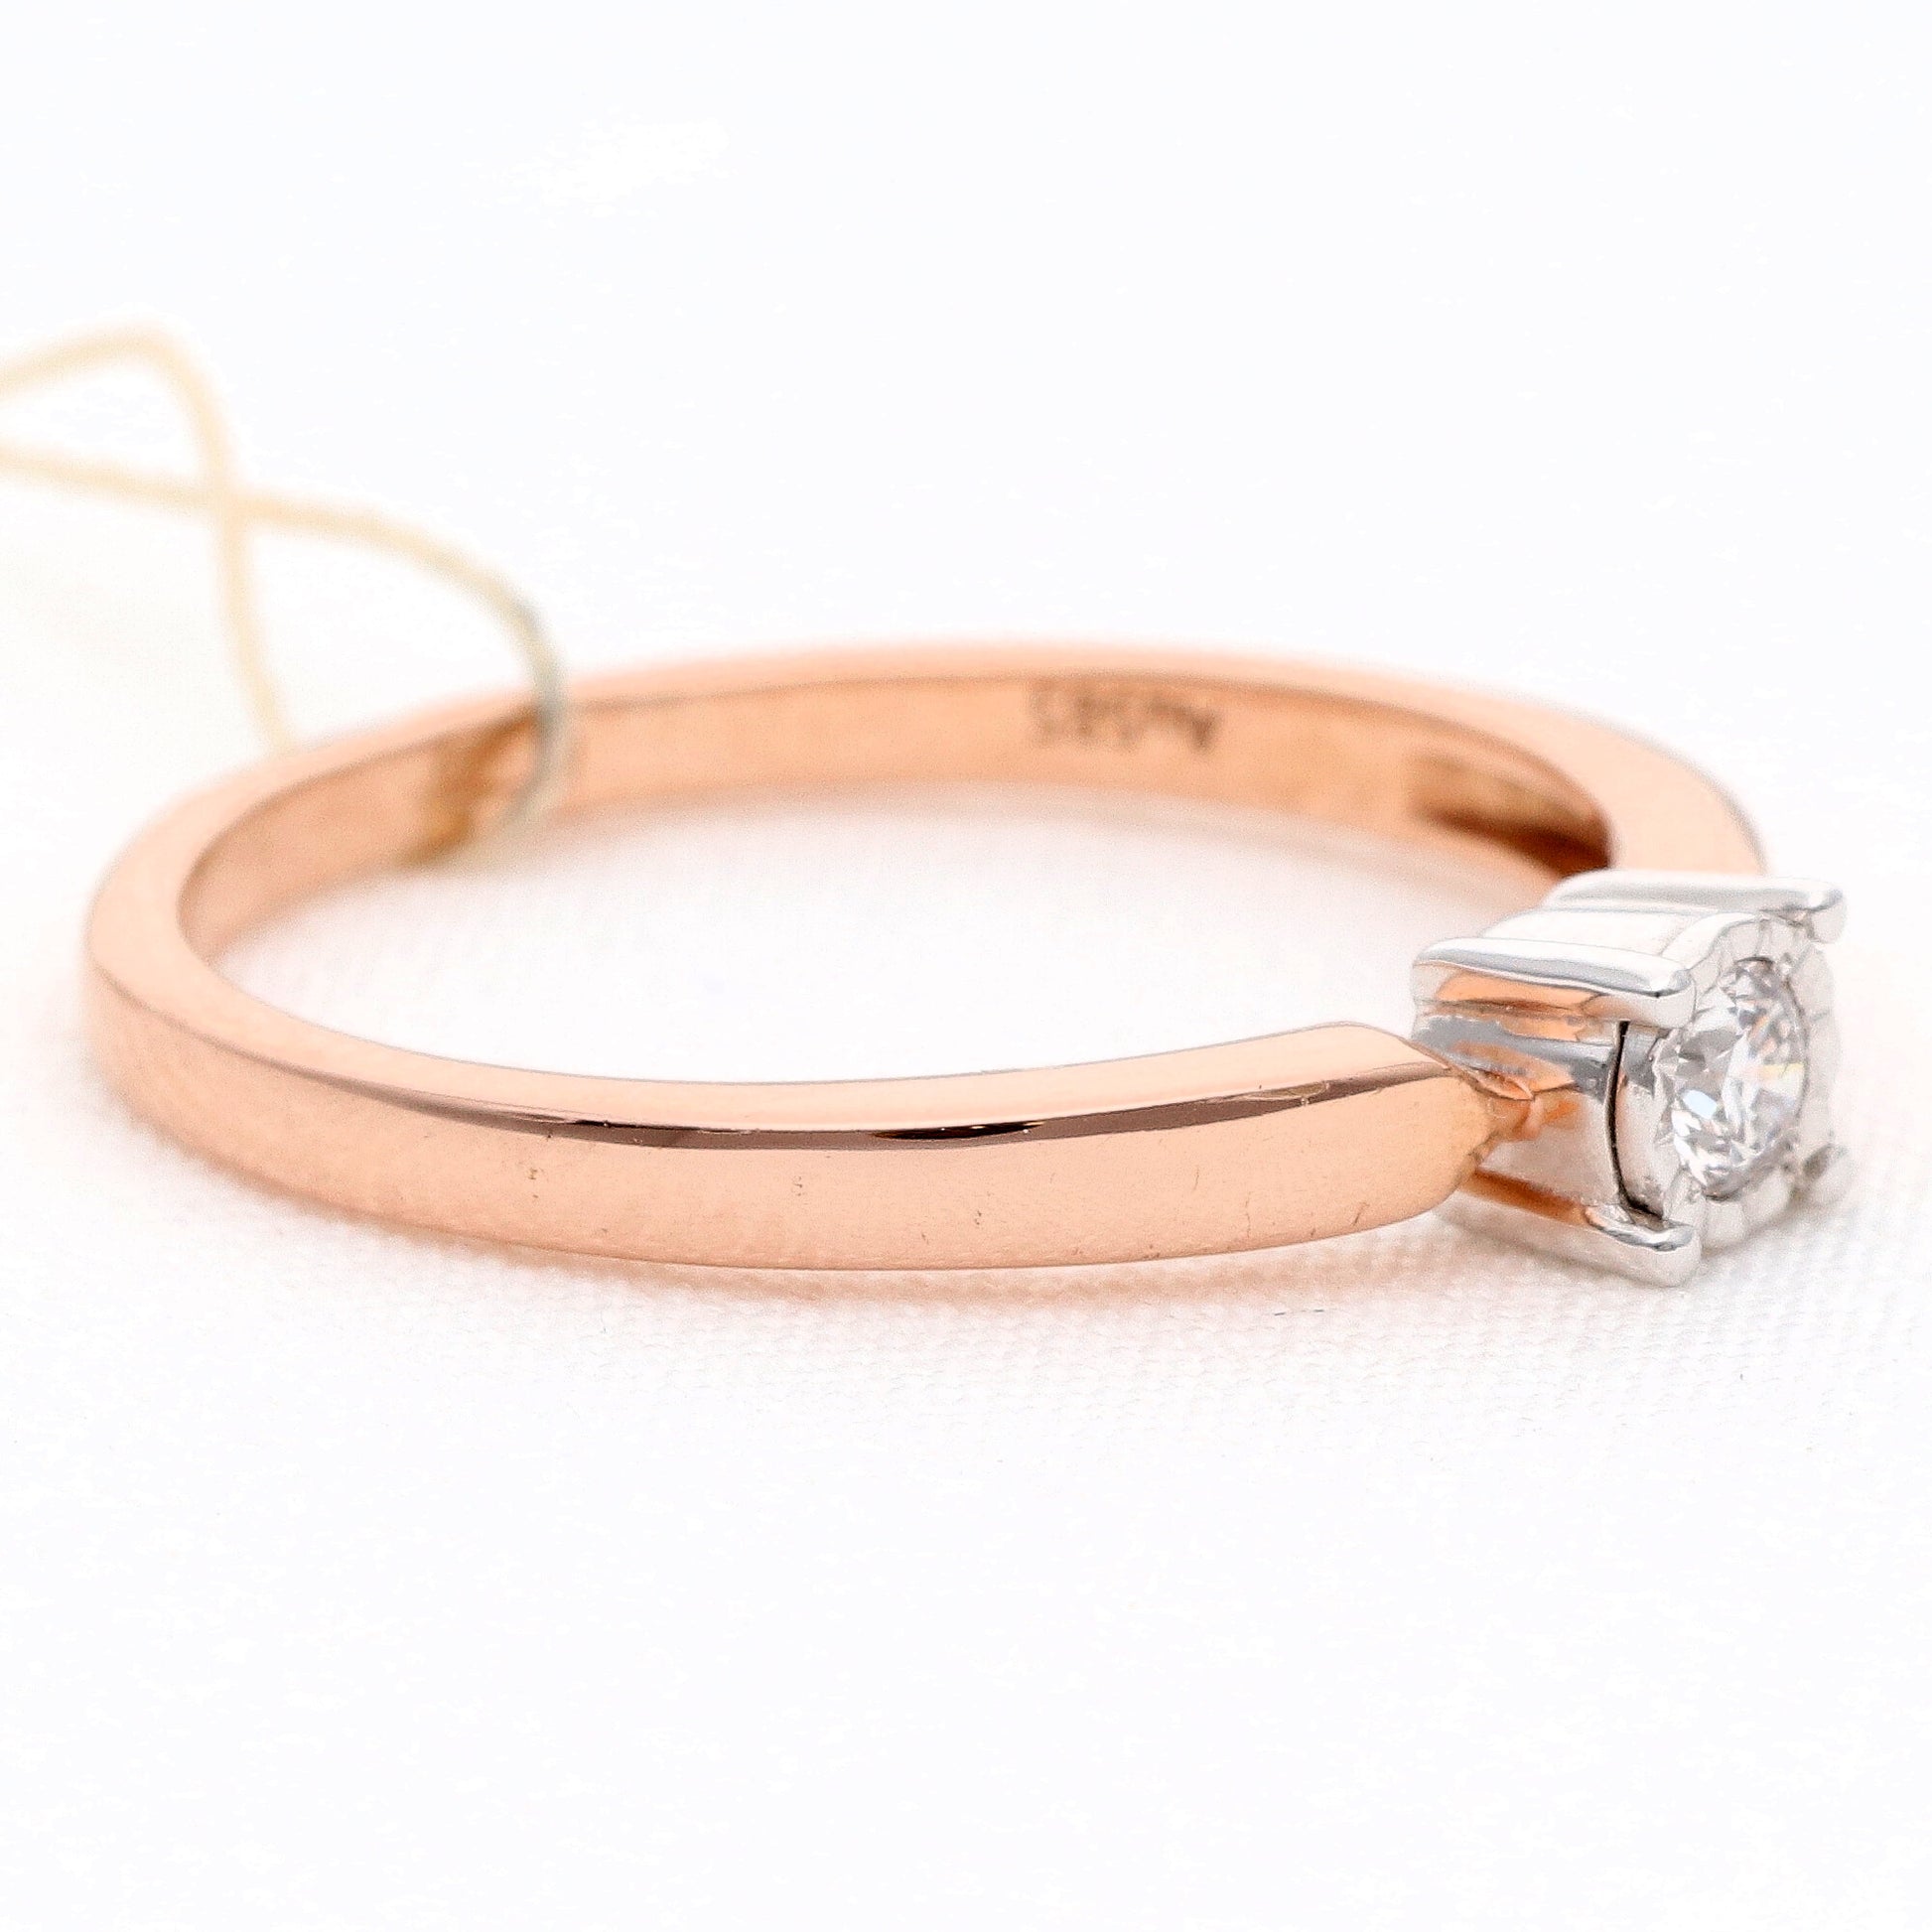 Žiedas su deimantu 0,08ct vestuviniaiziedai.lt